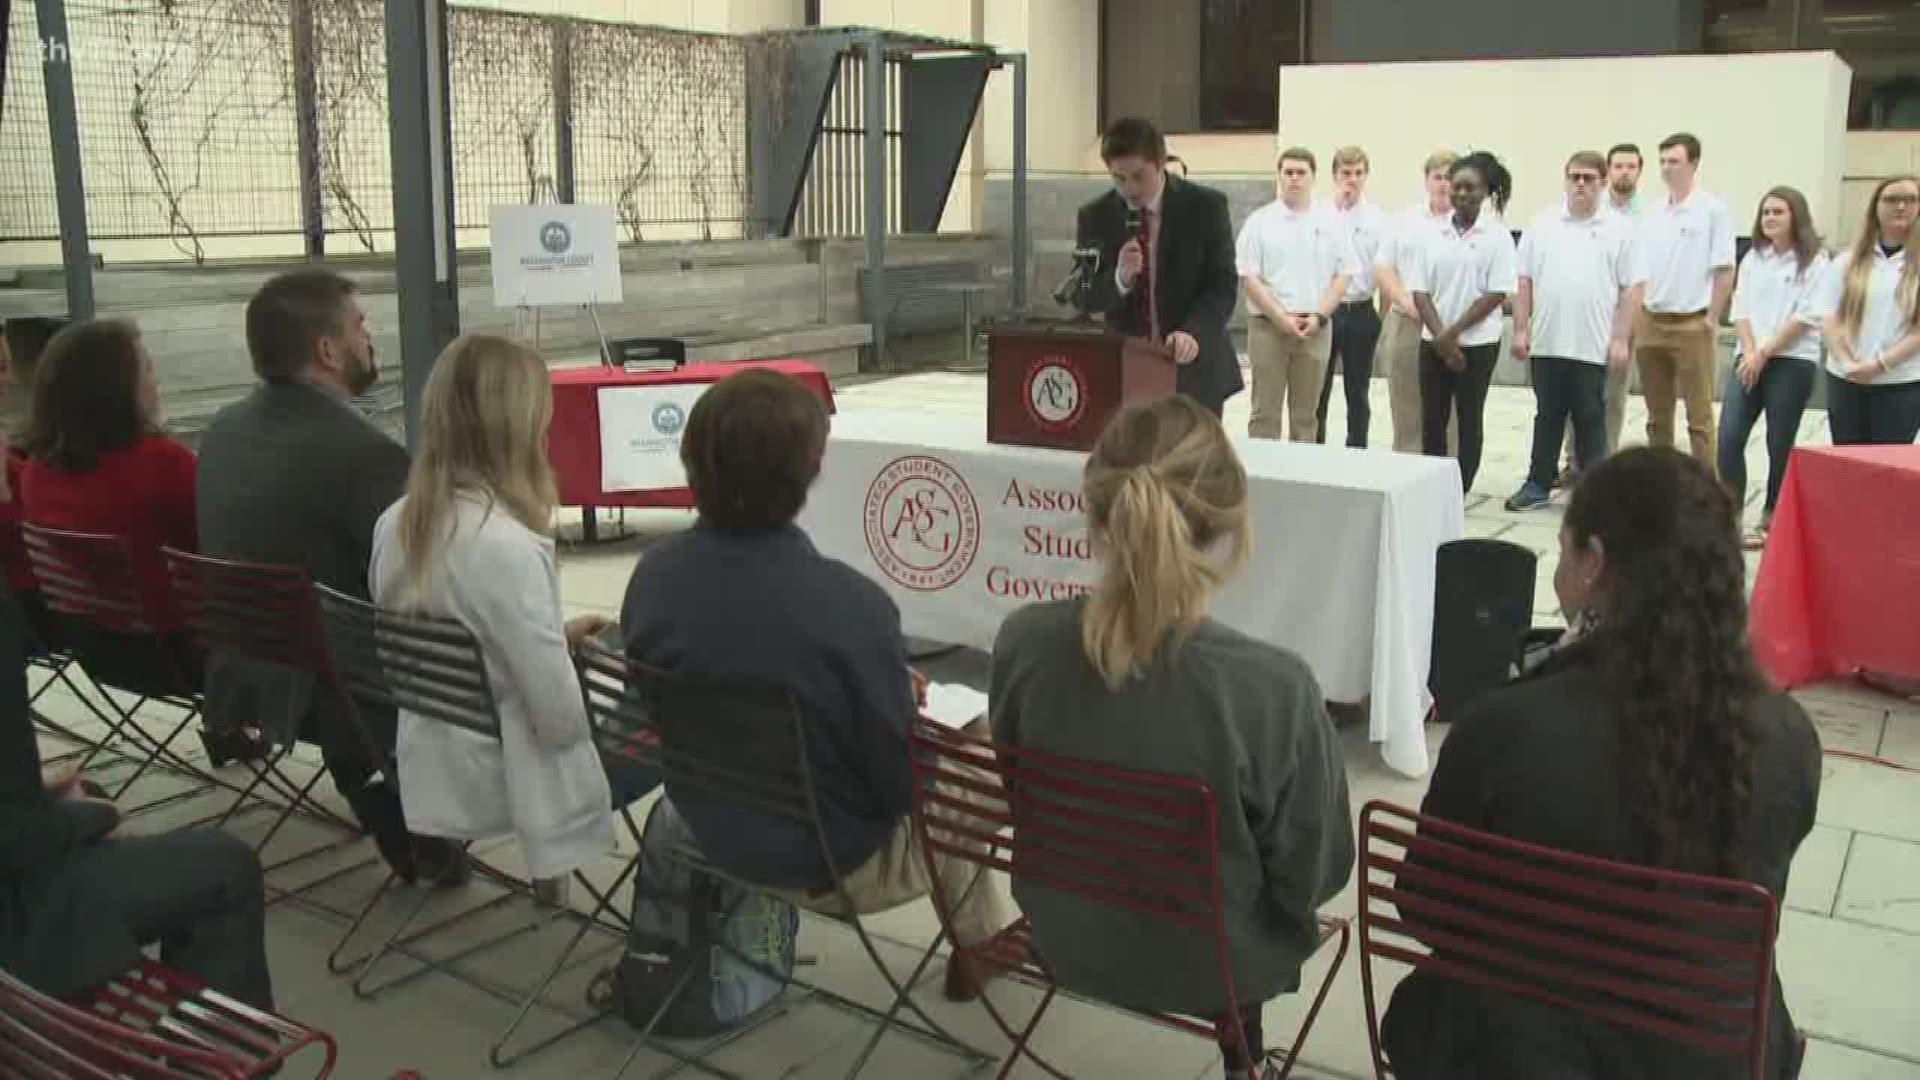 Opioid Awareness Week kicks off at Univ. of Arkansas